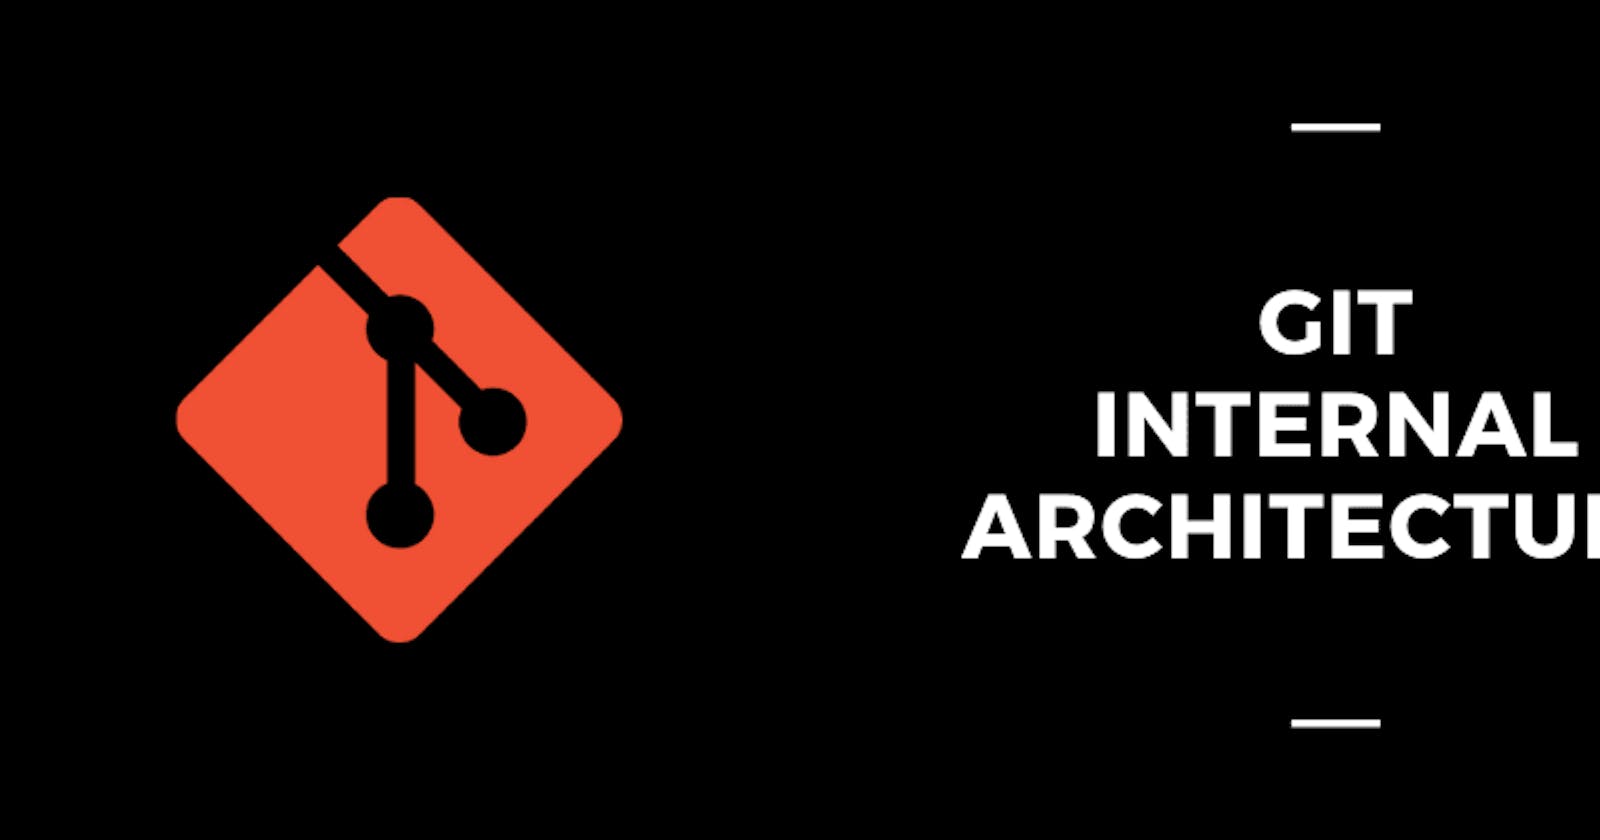 Git internal architecture 🏛